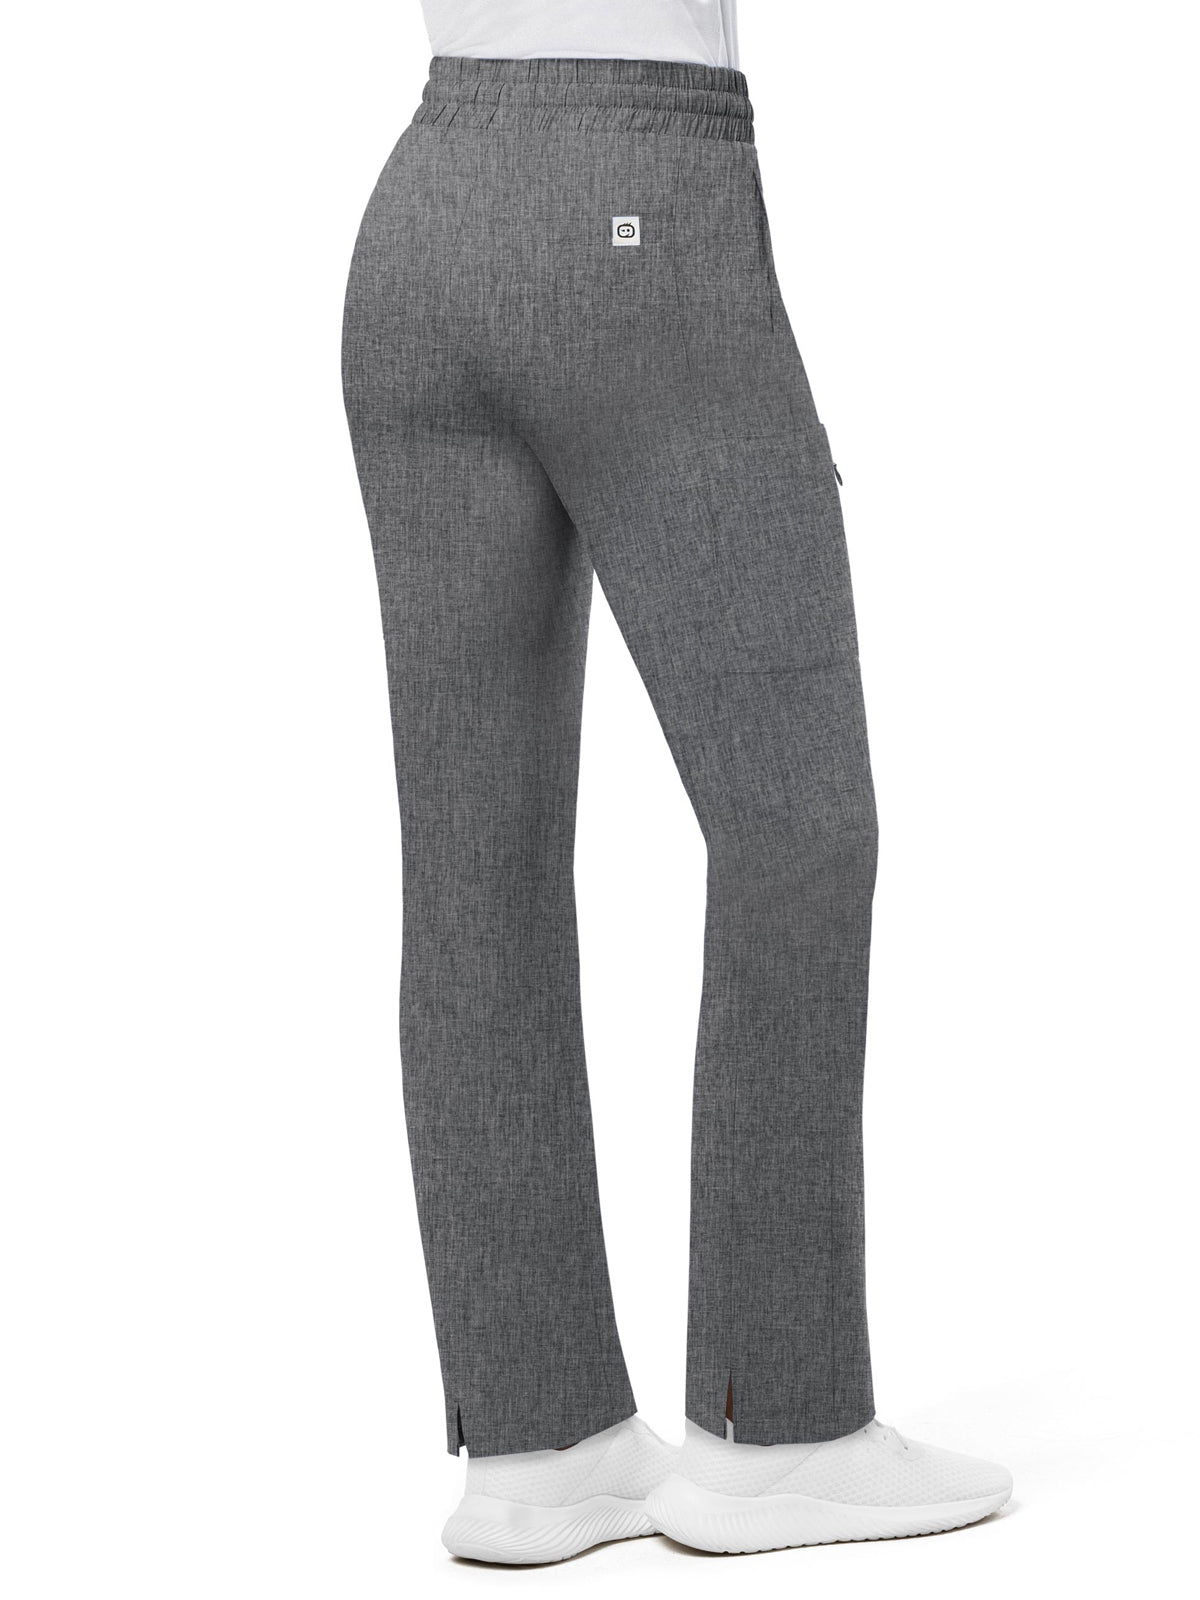 Women's High Waist Slim Cargo Pant - 5334 - Grey Heather